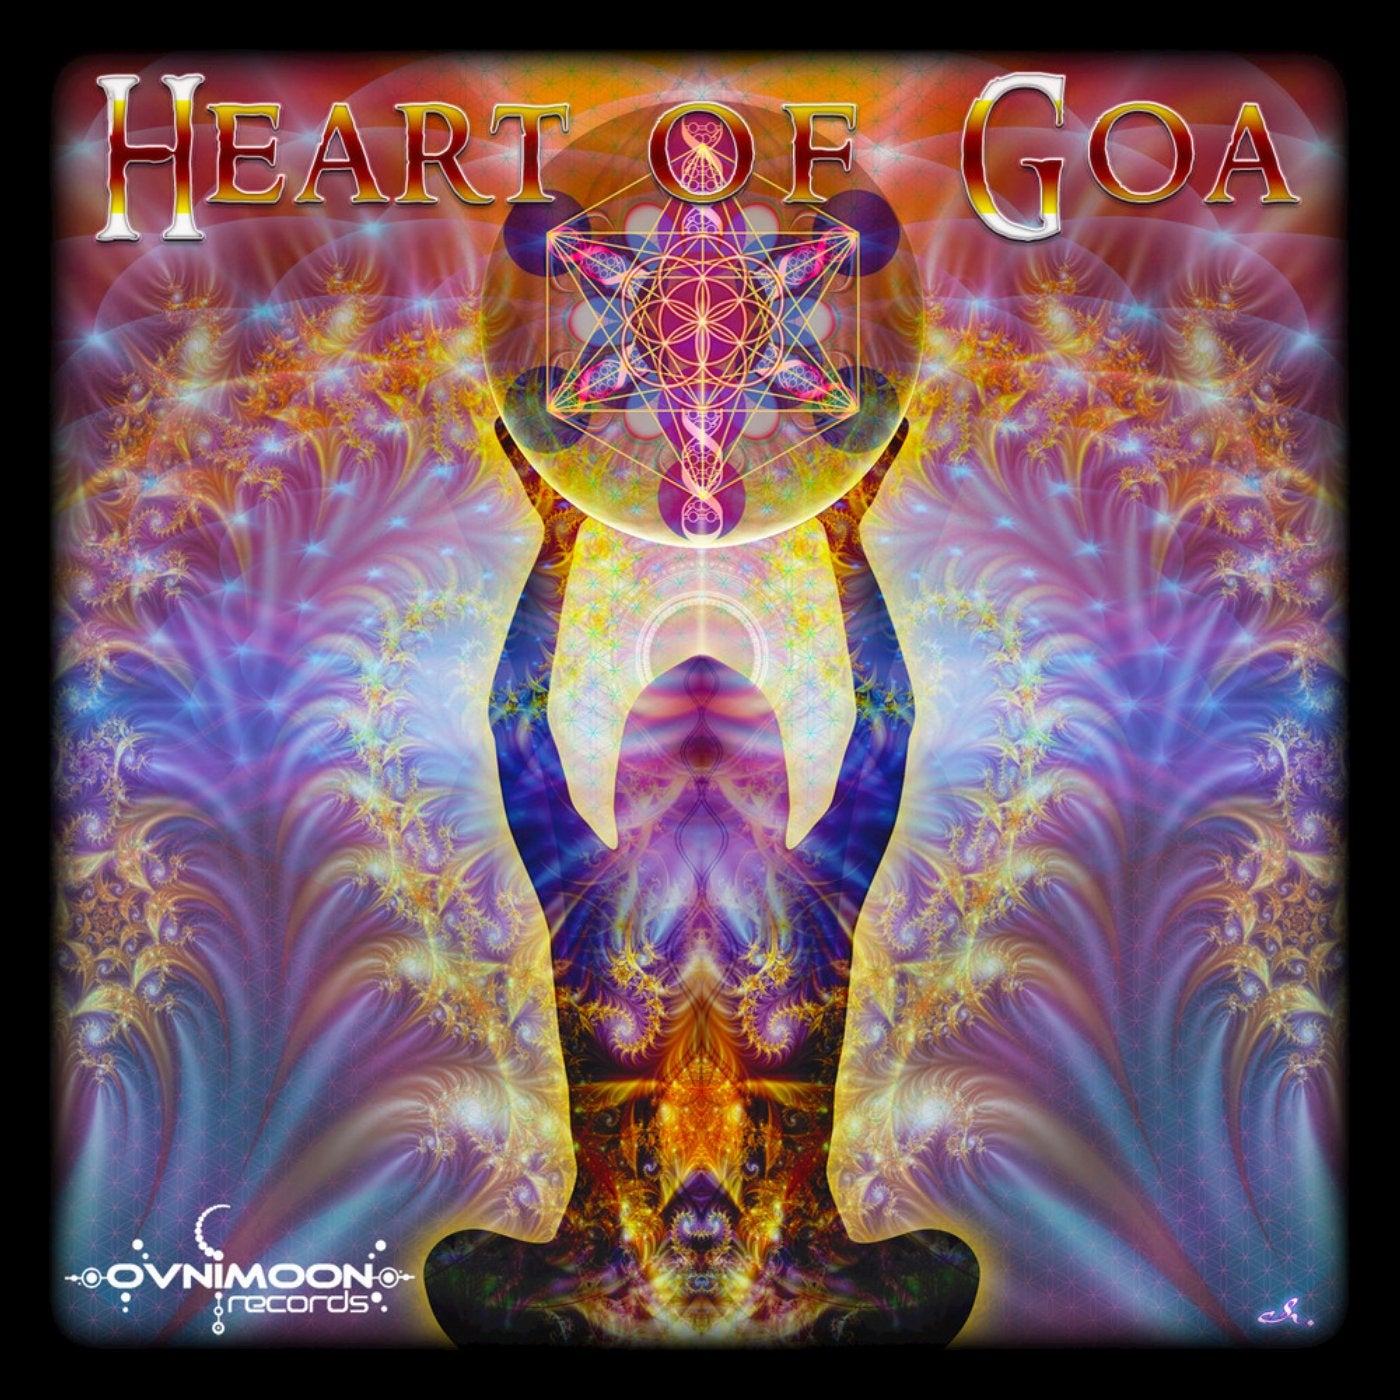 Heart of Goa